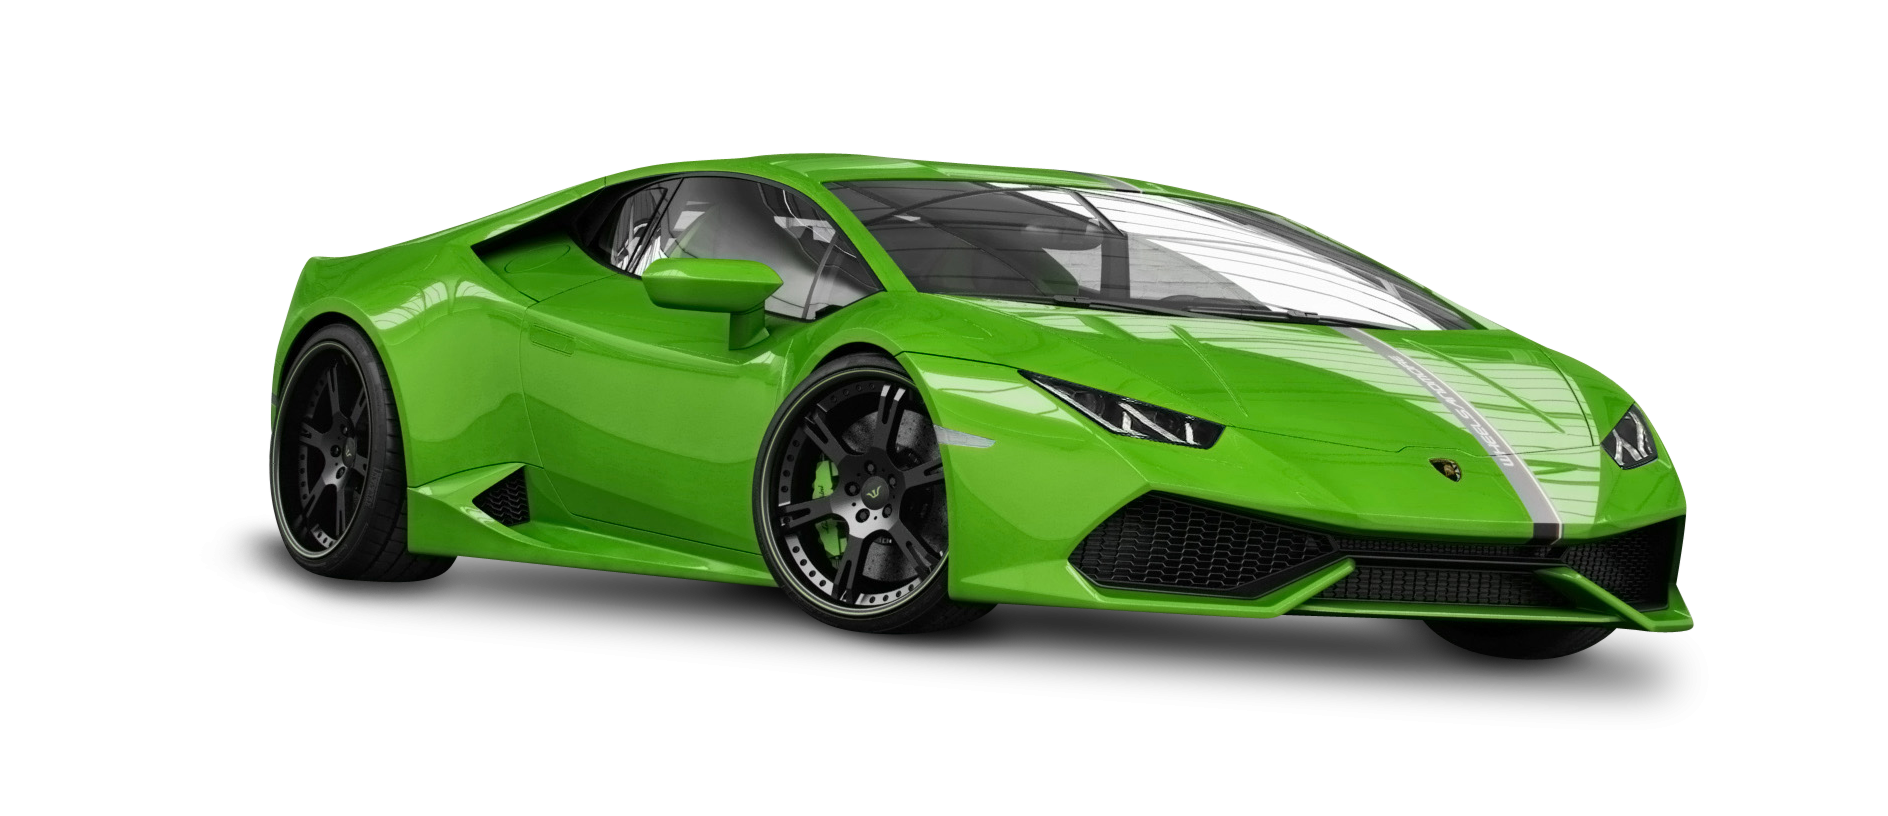 Green Lamborghini PNG HD Image pngteam.com